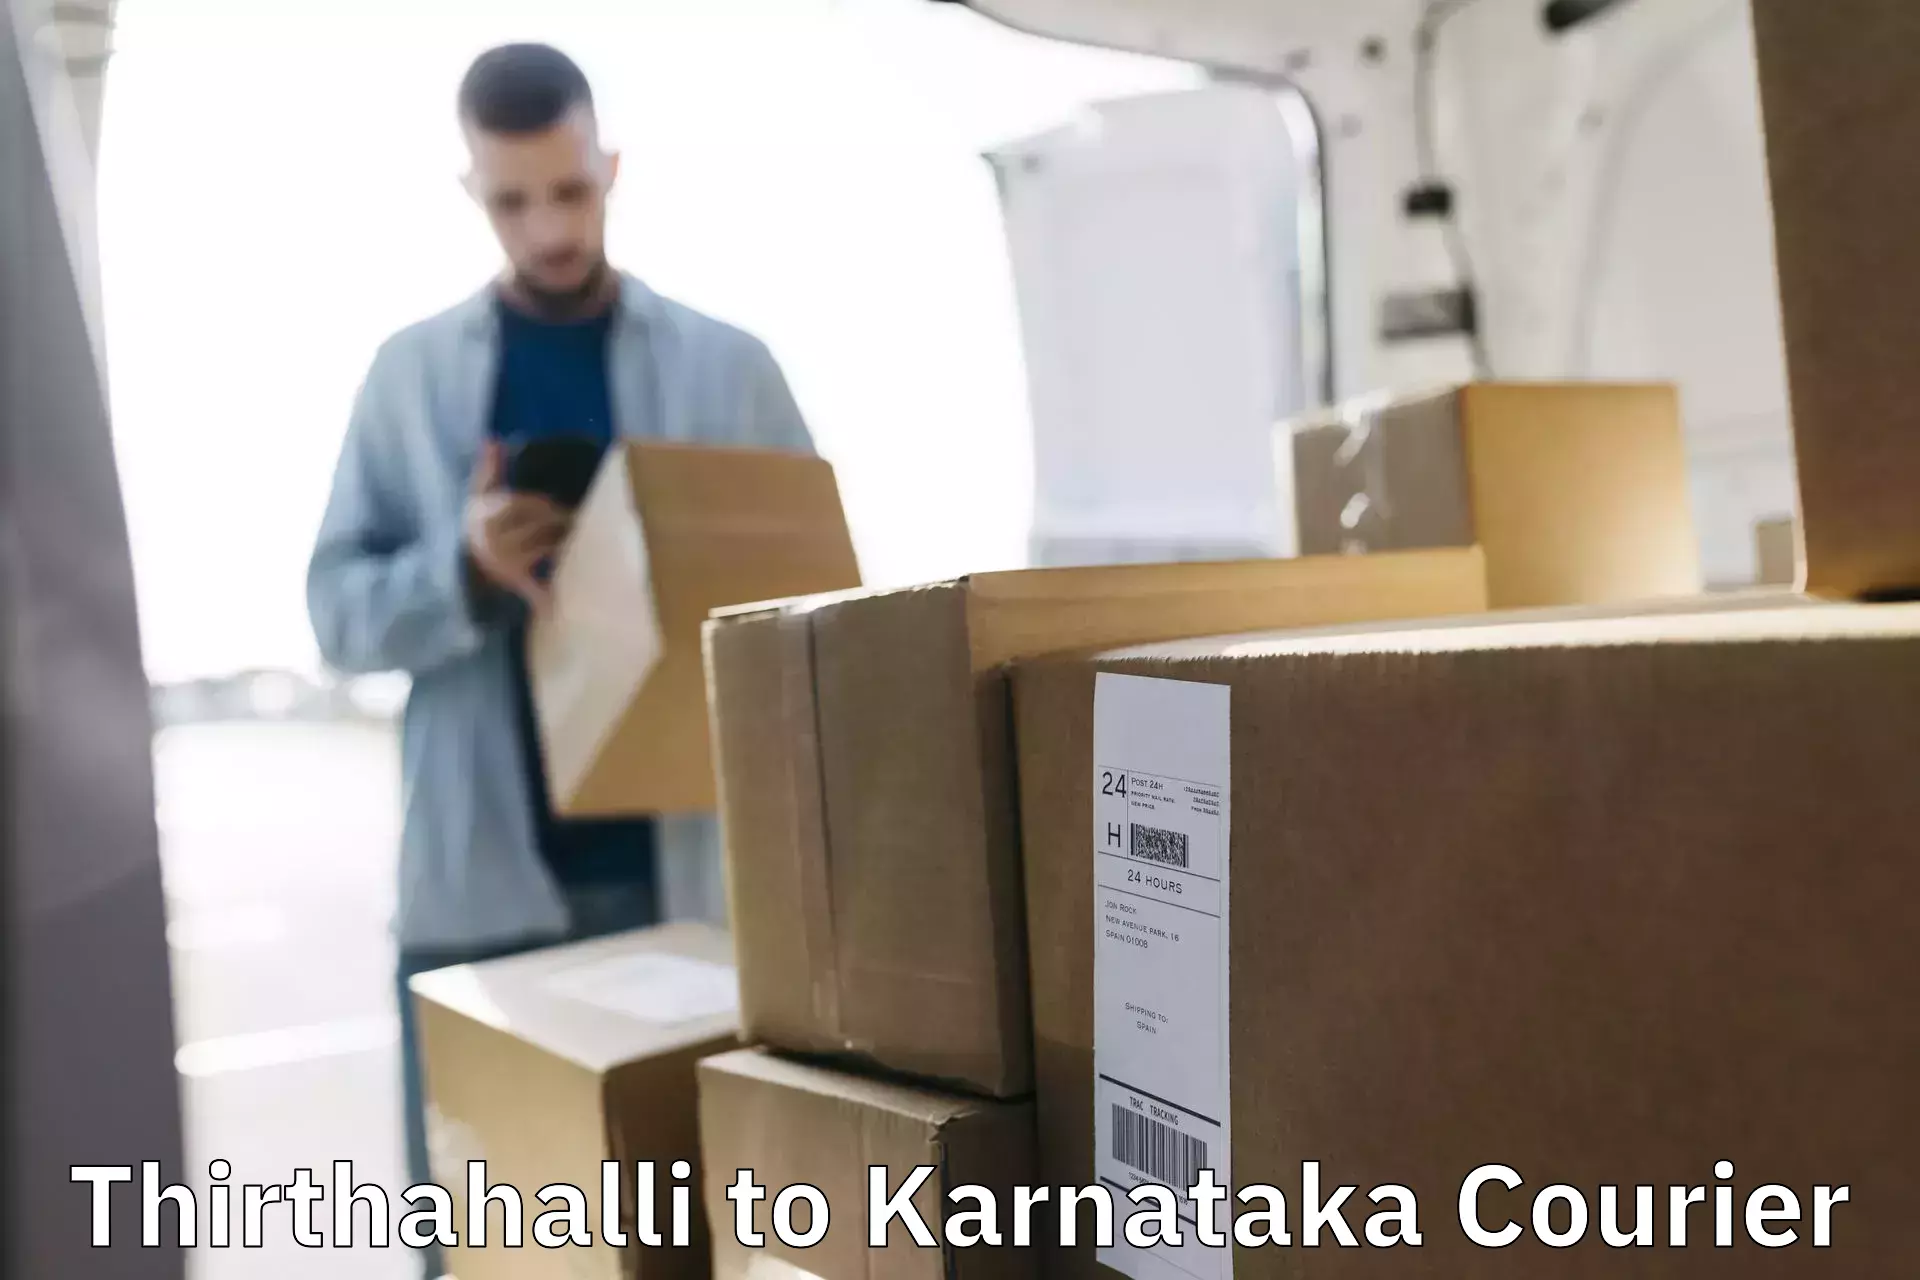 Advanced delivery network Thirthahalli to Karnataka